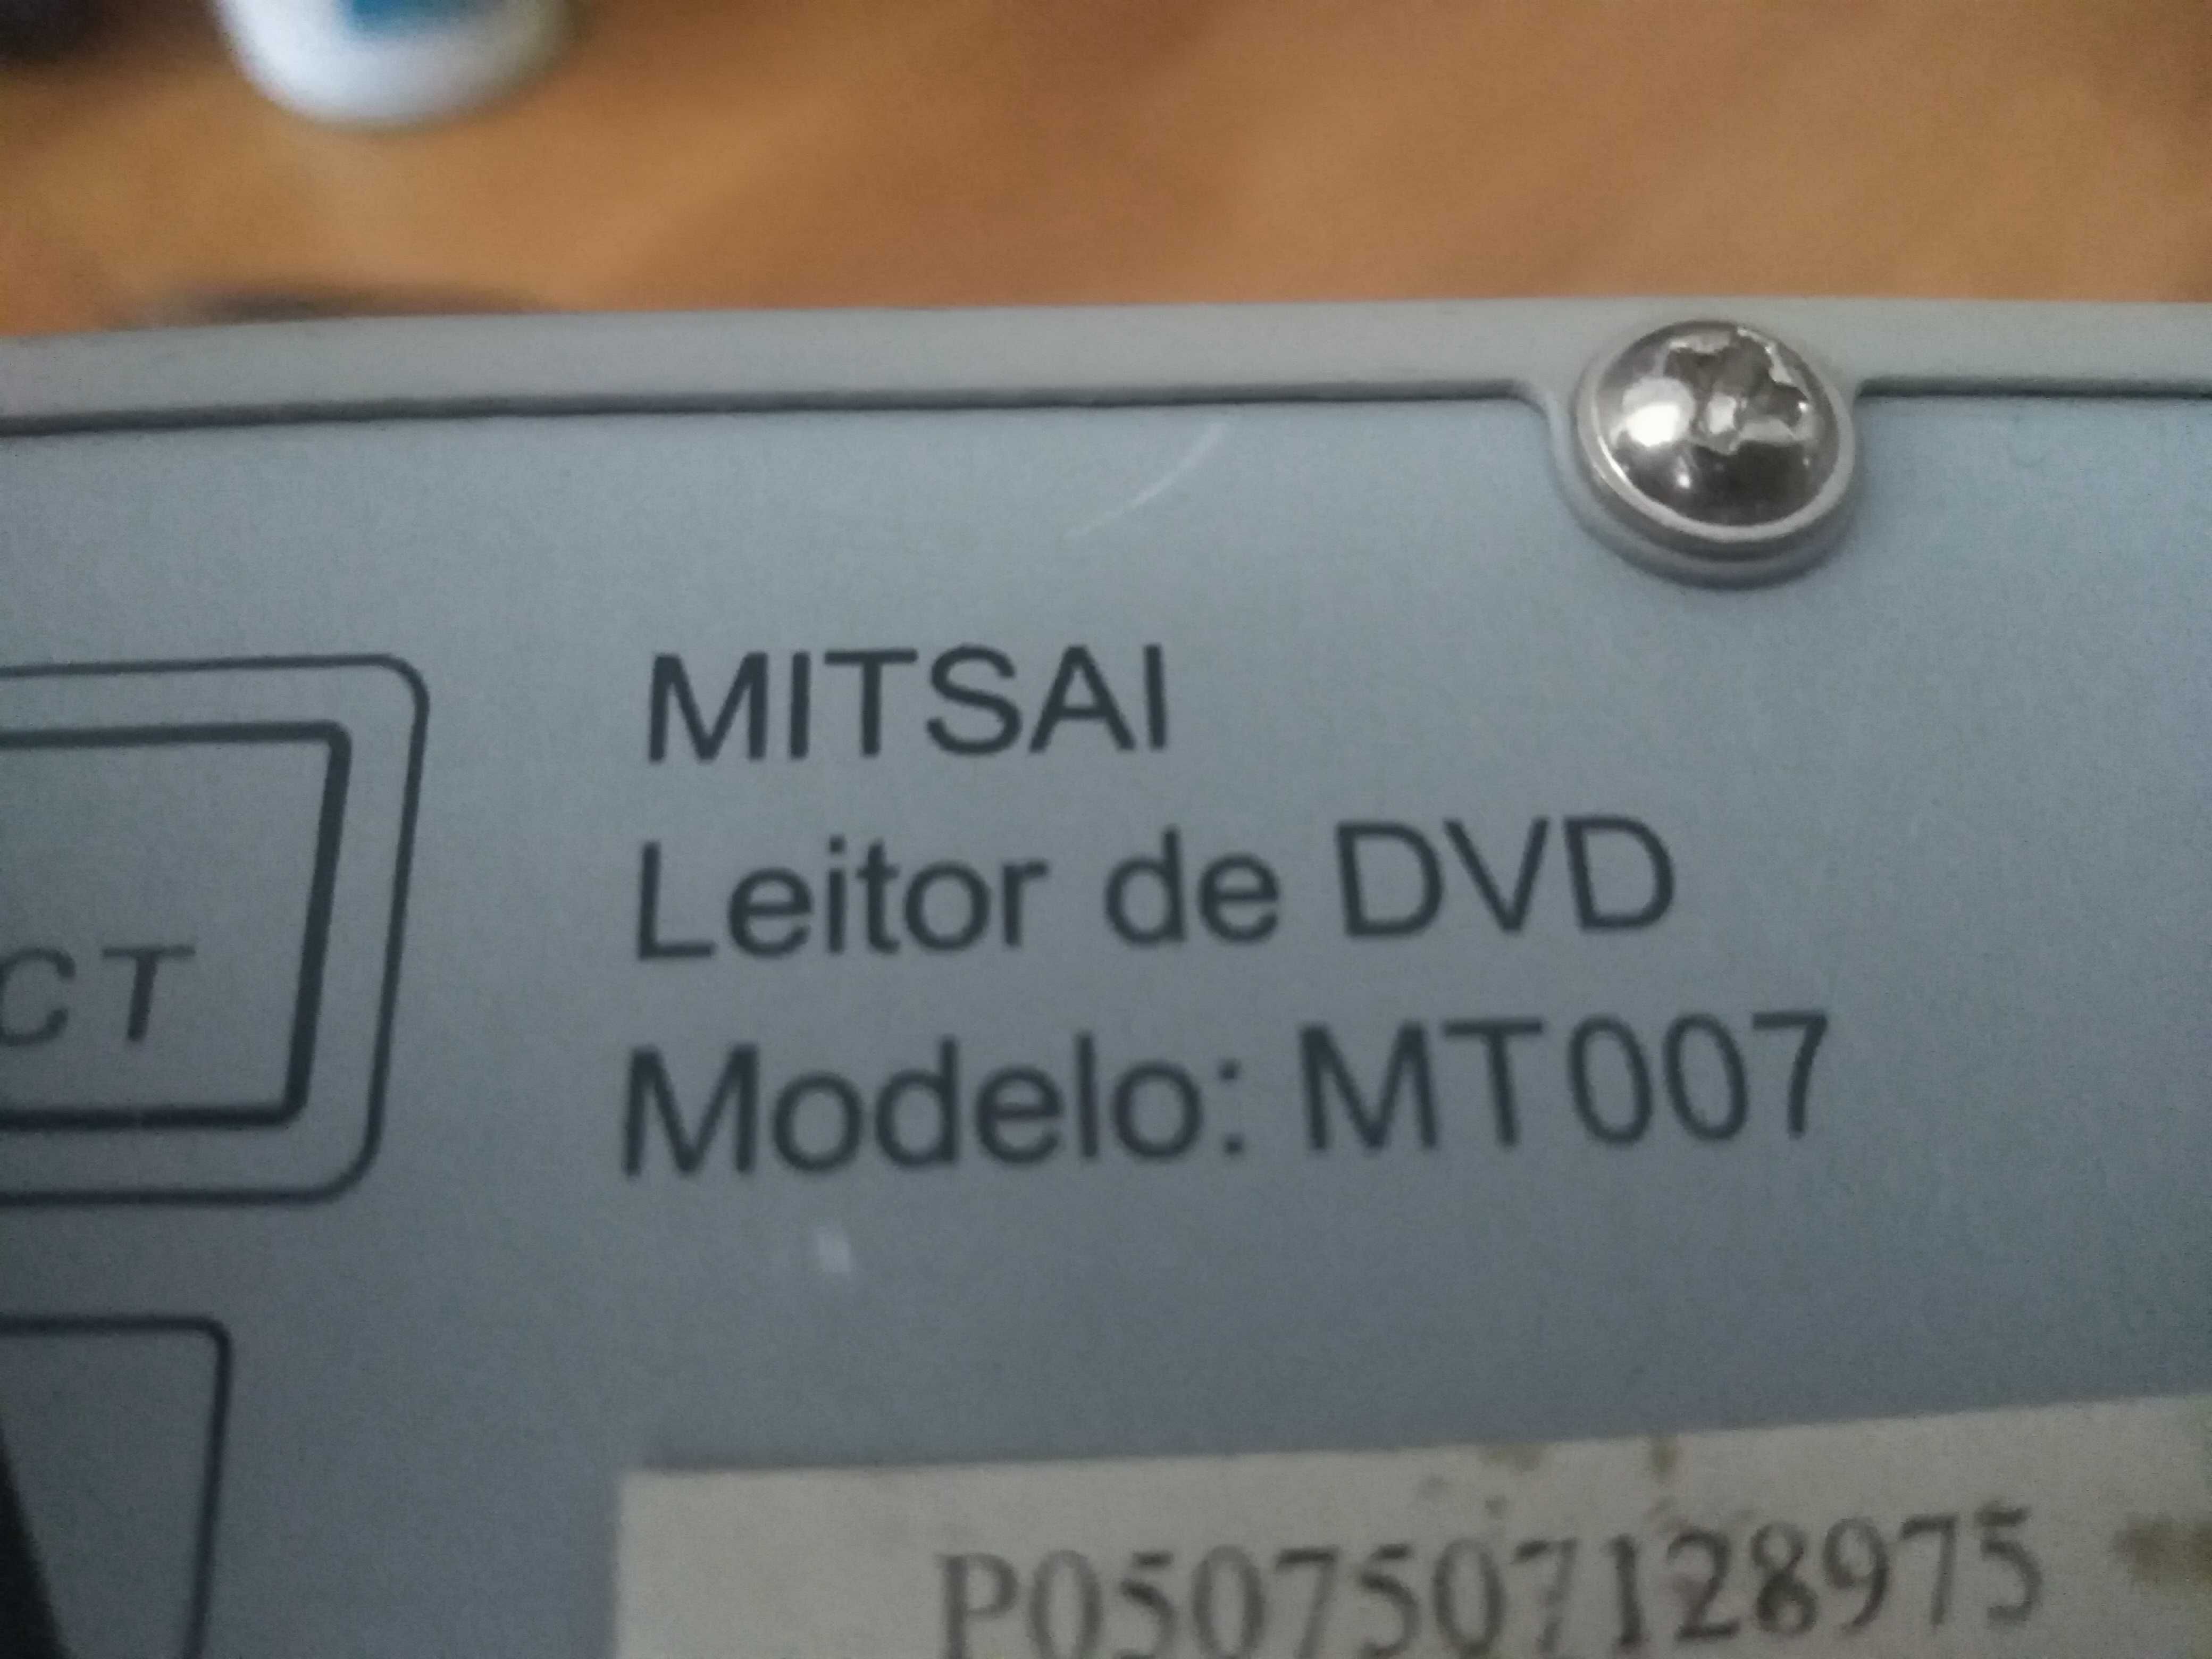 Leitor DVD Mitsai modelo MT007